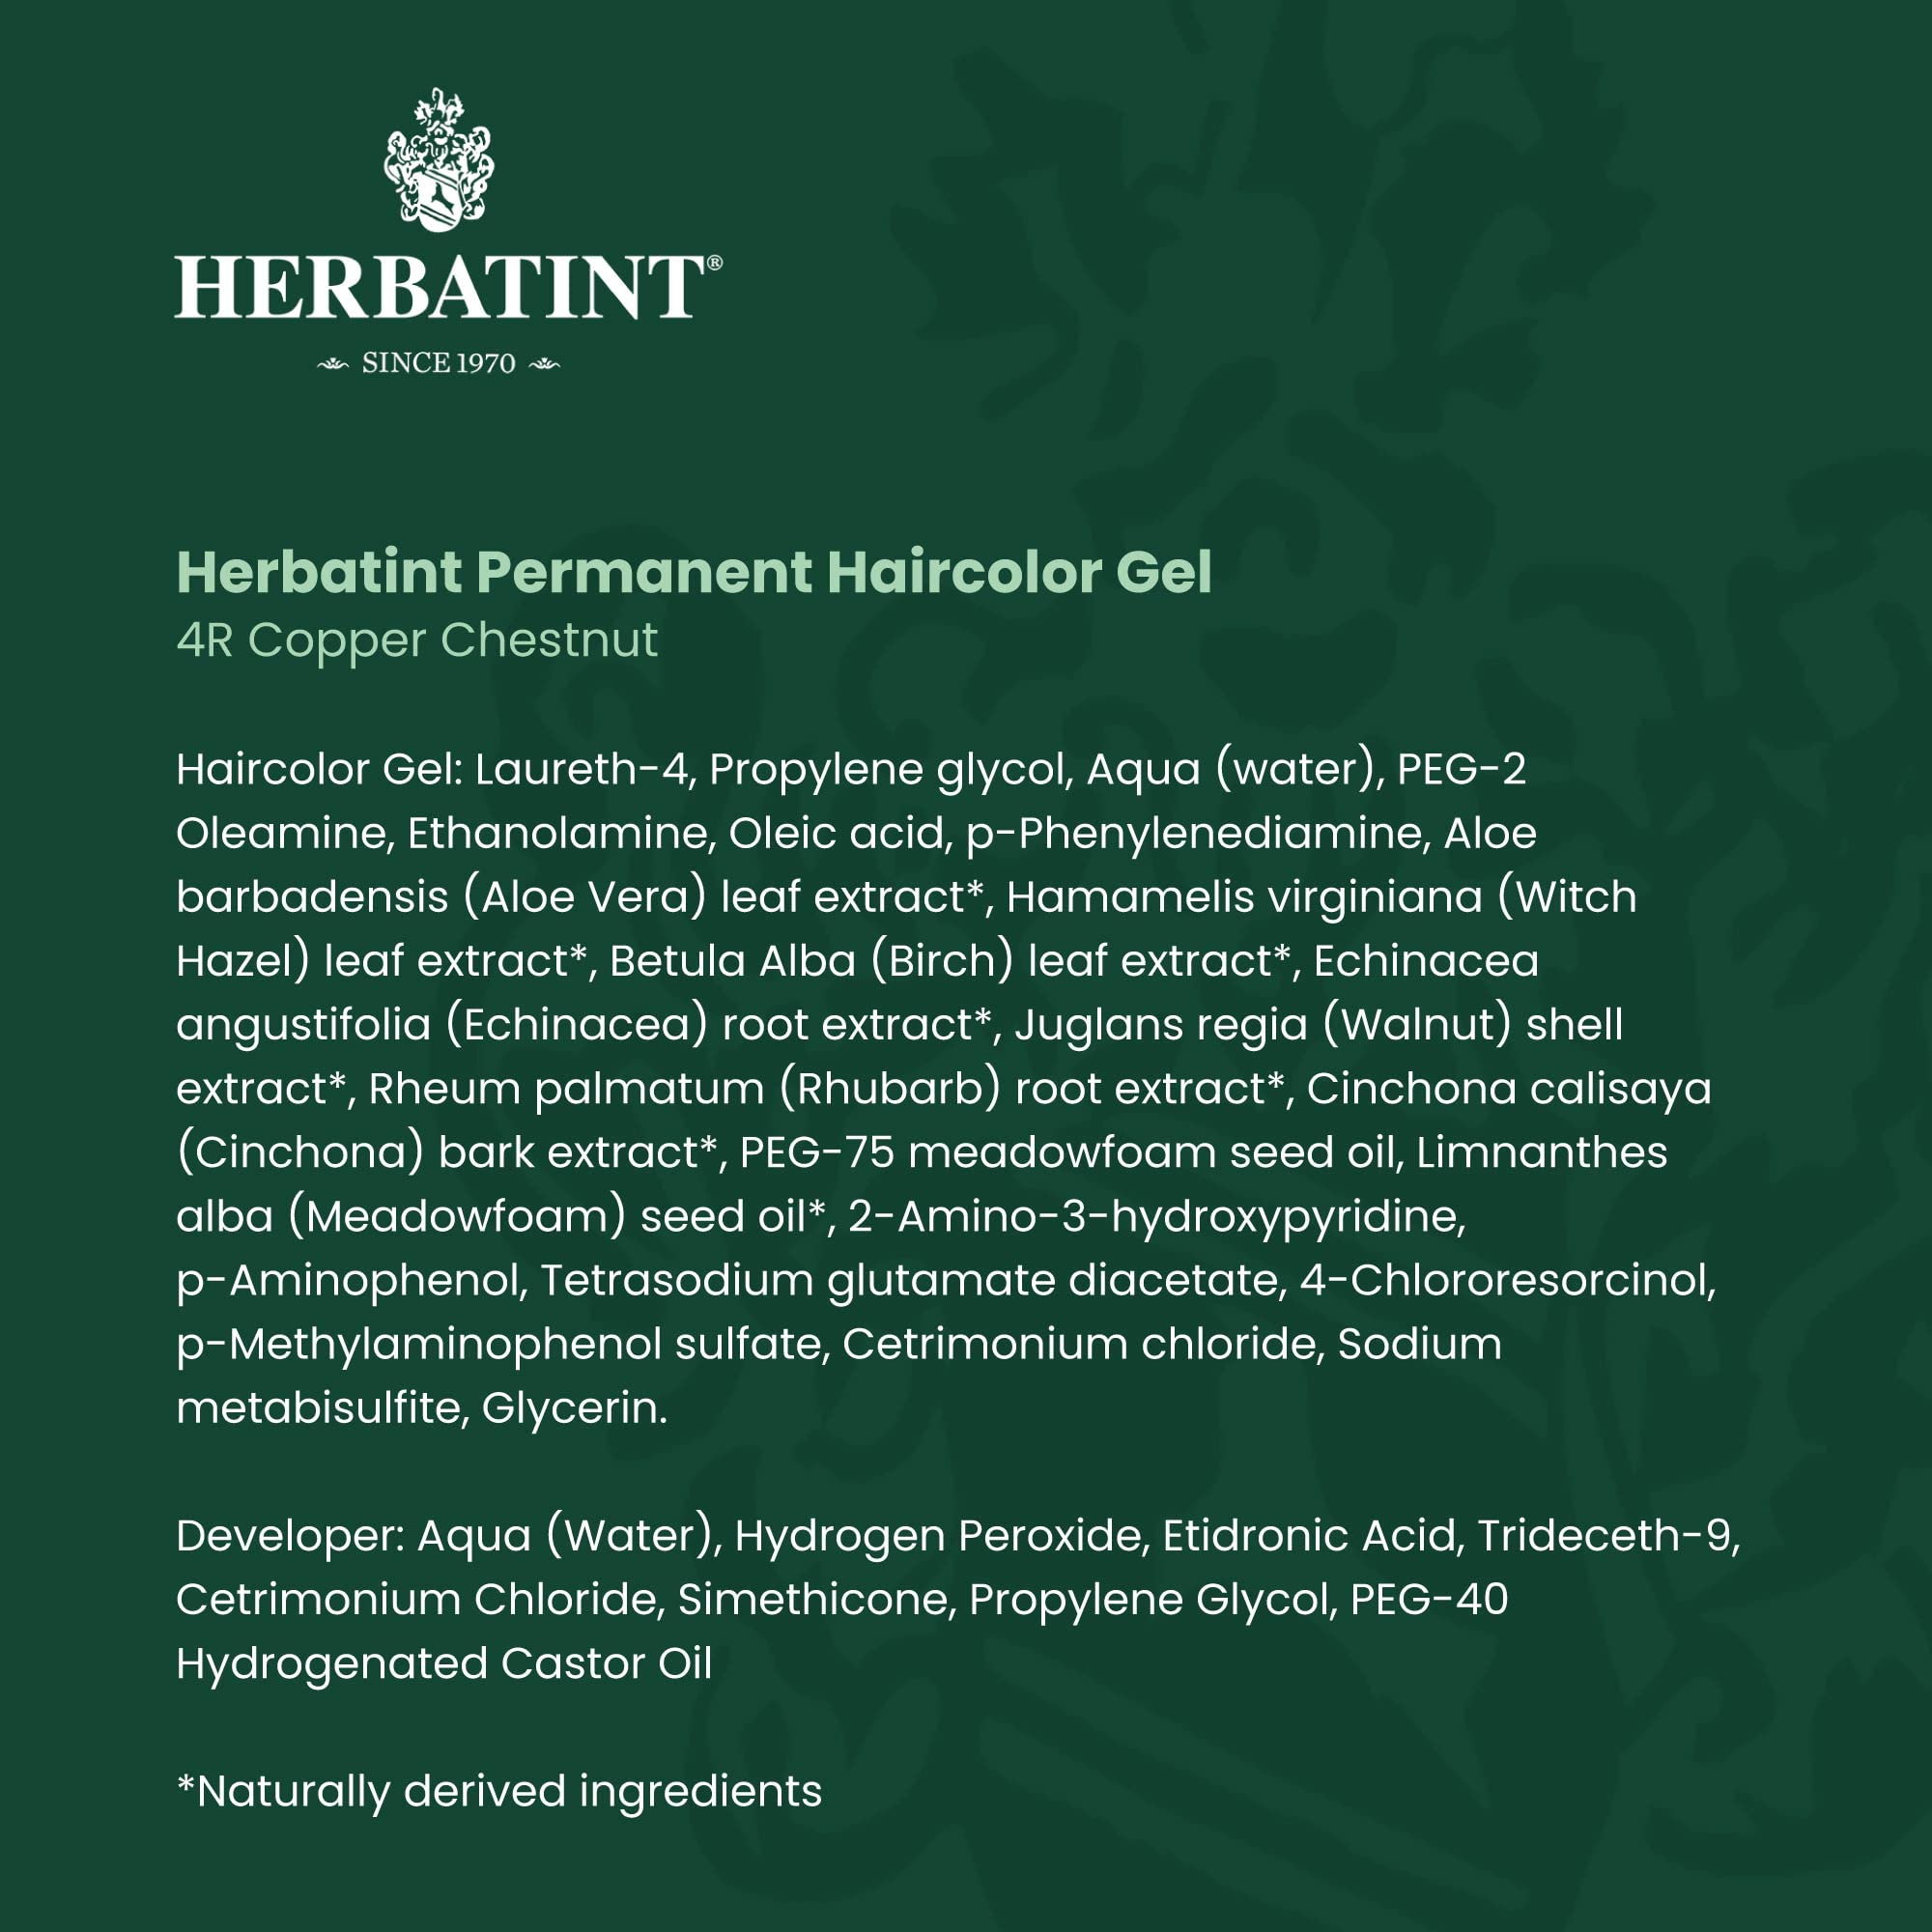 Herbatint Permanent Haircolor Gel, 4R Copper Chestnut, Alcohol Free, Vegan, 100% Grey Coverage - 4.56 oz